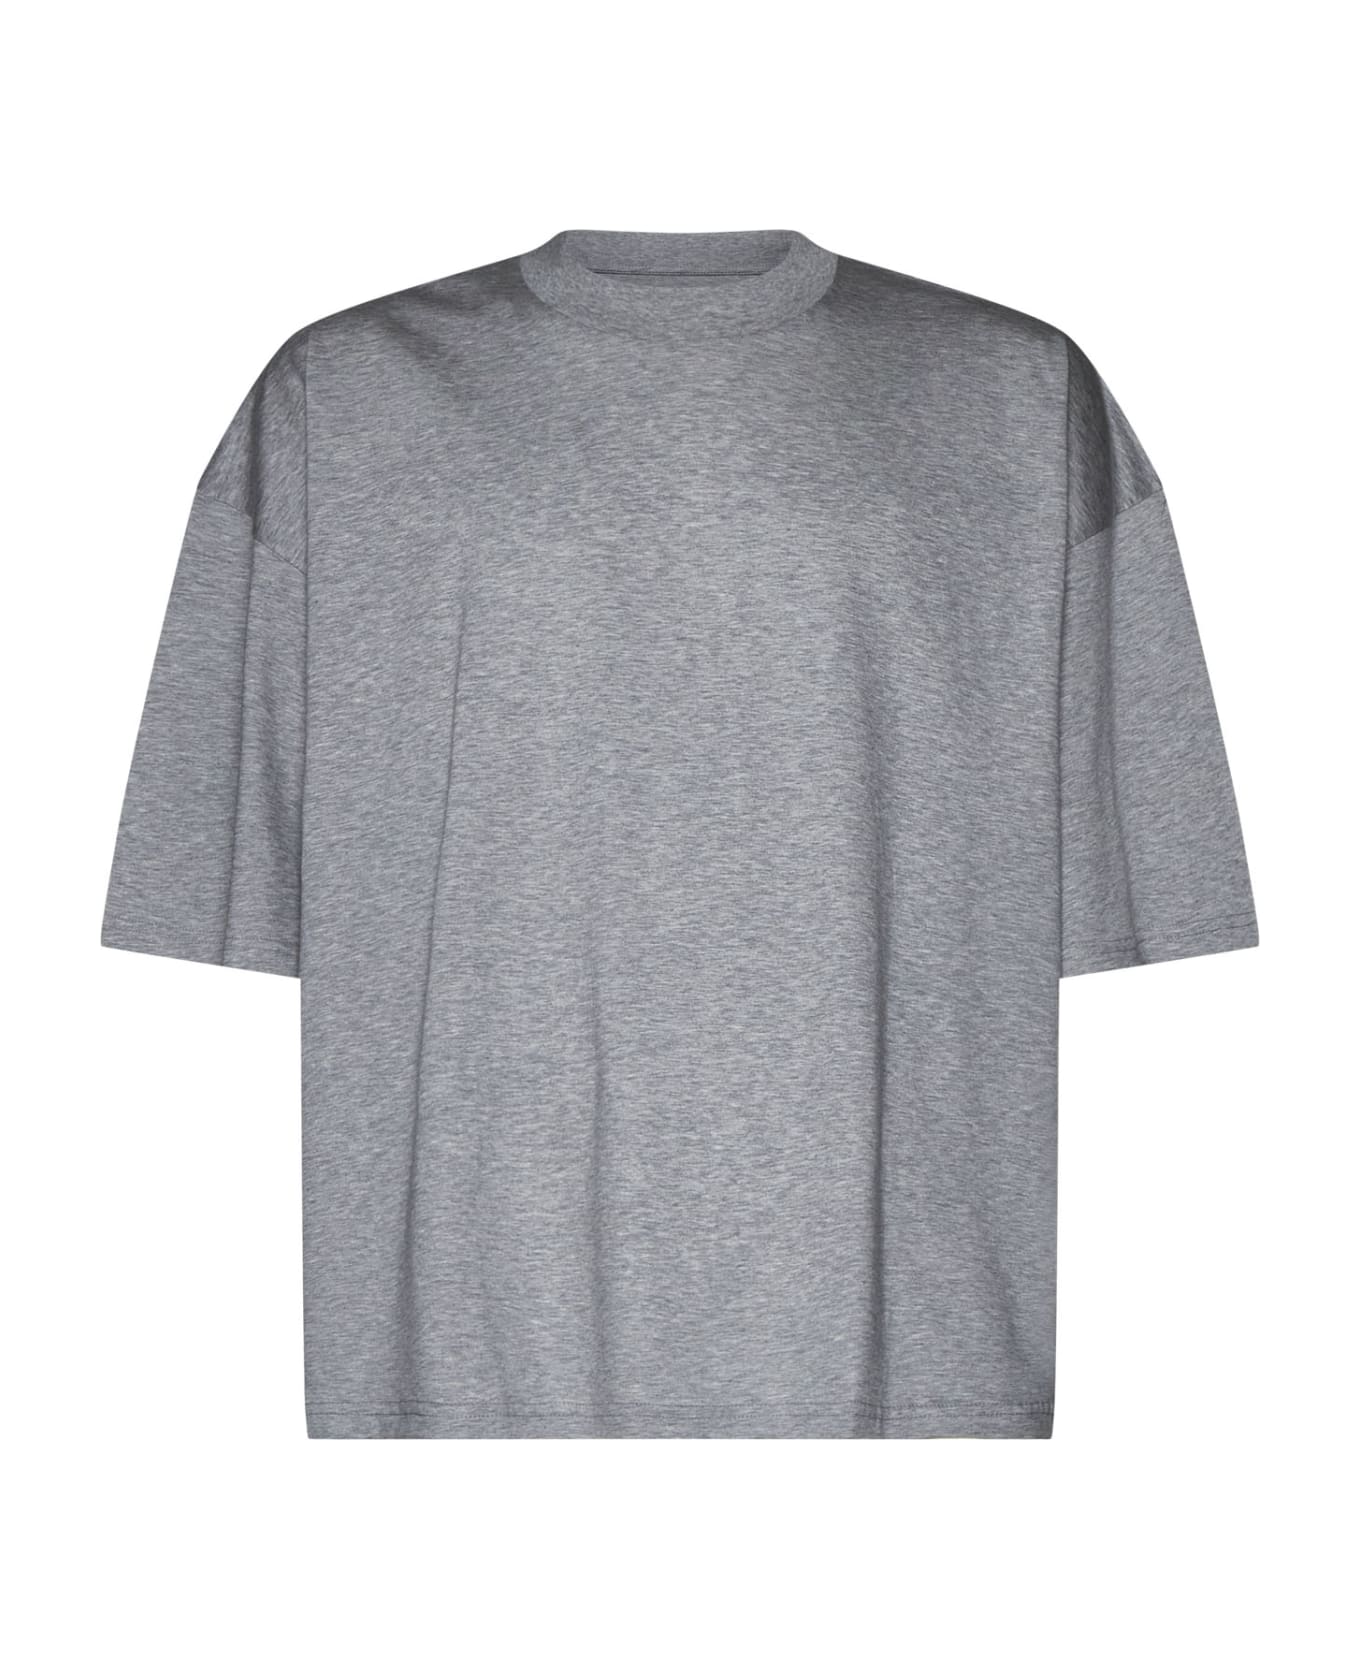 Studio Nicholson T-Shirt - Grey marl